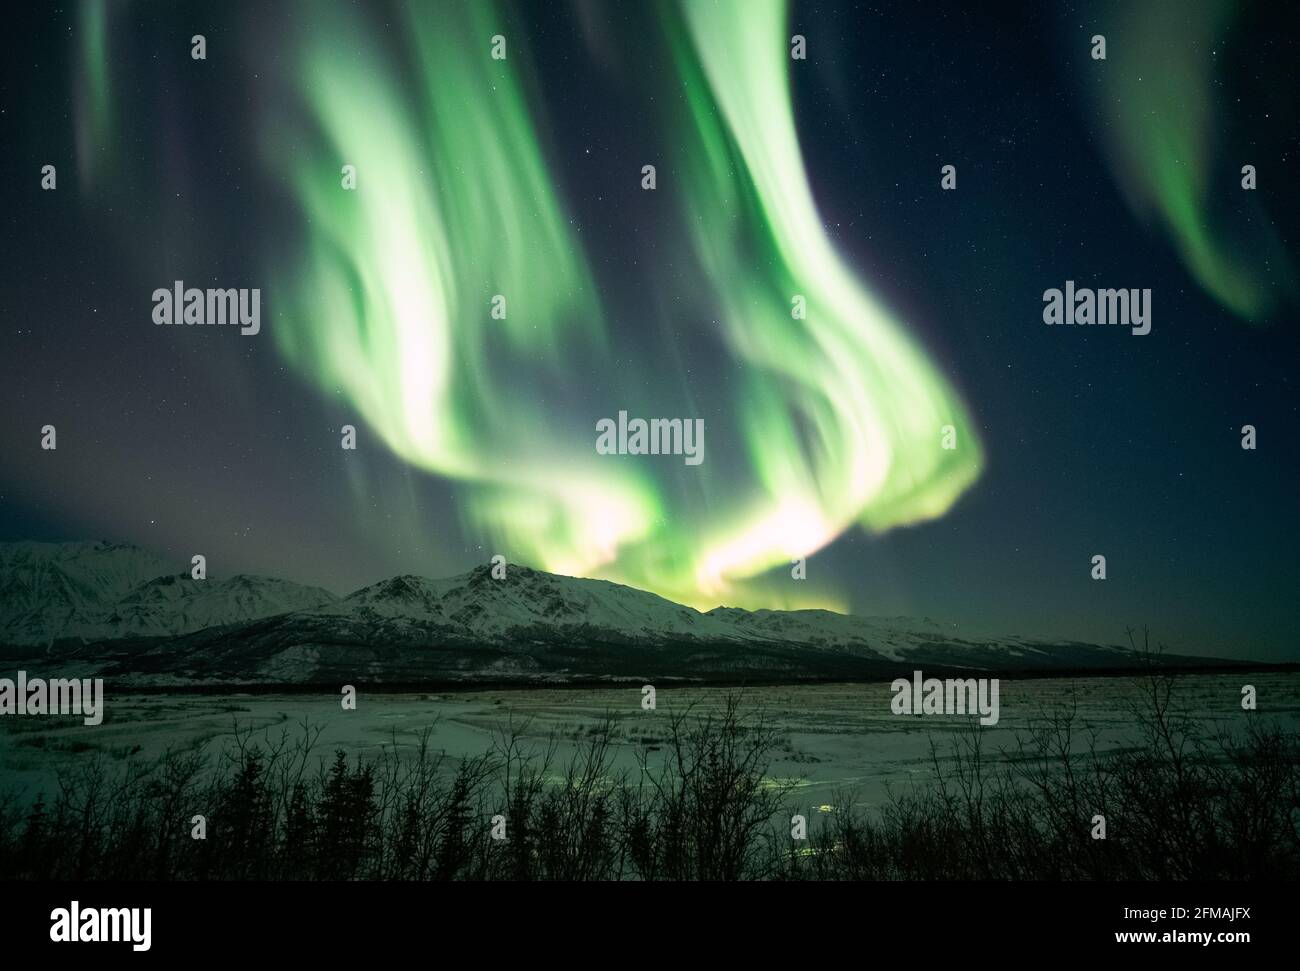 auroras over the Alaska range during an intense solar flare! Stock Photo